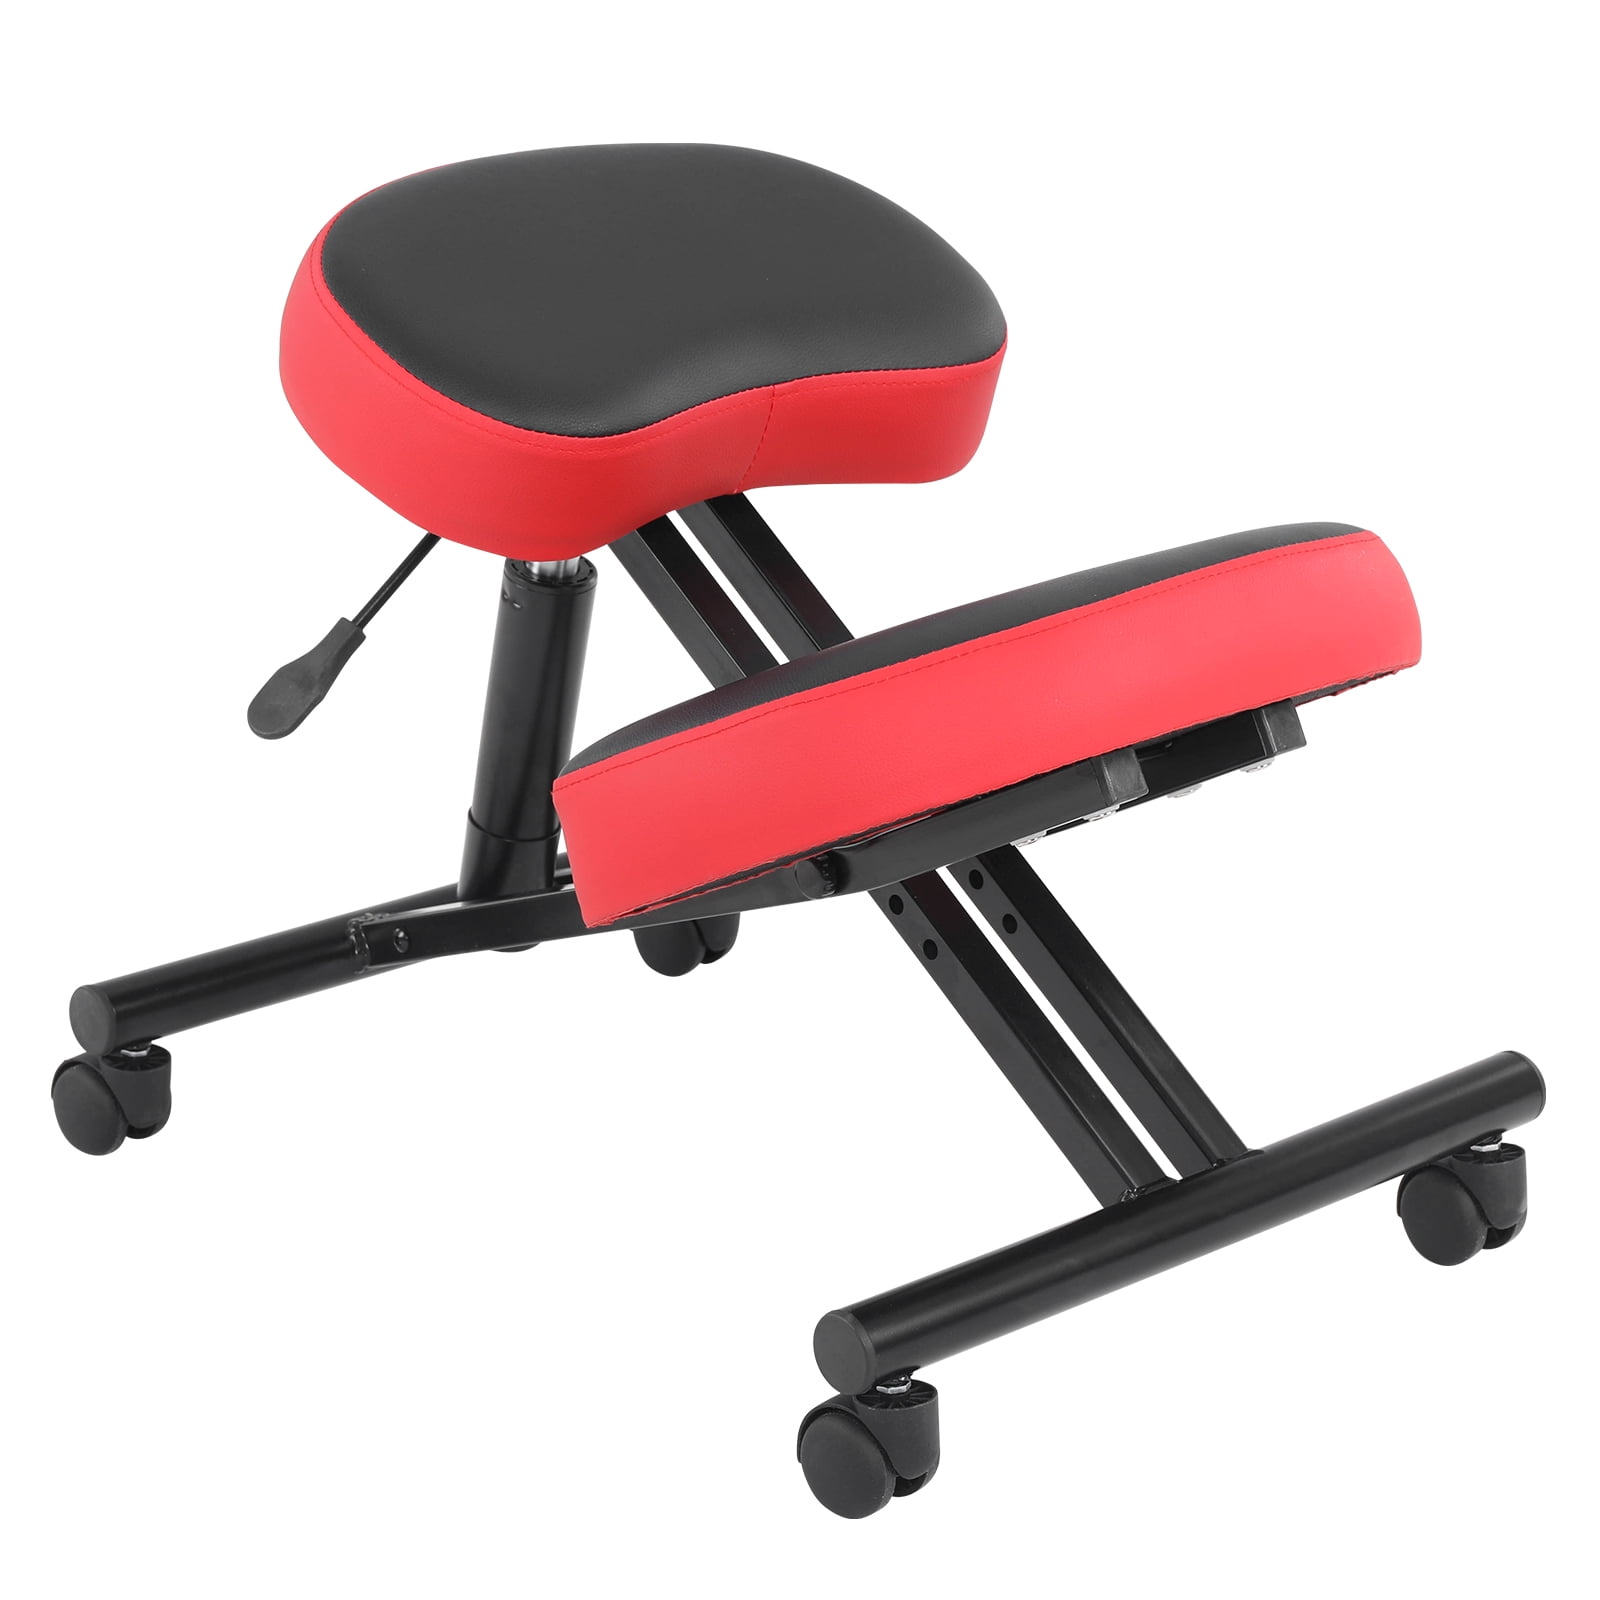 Height Adjustable Ergonomic Kneeling Ergonomic Kneeling Chair Home Office Orthopaedic Posture Chairs